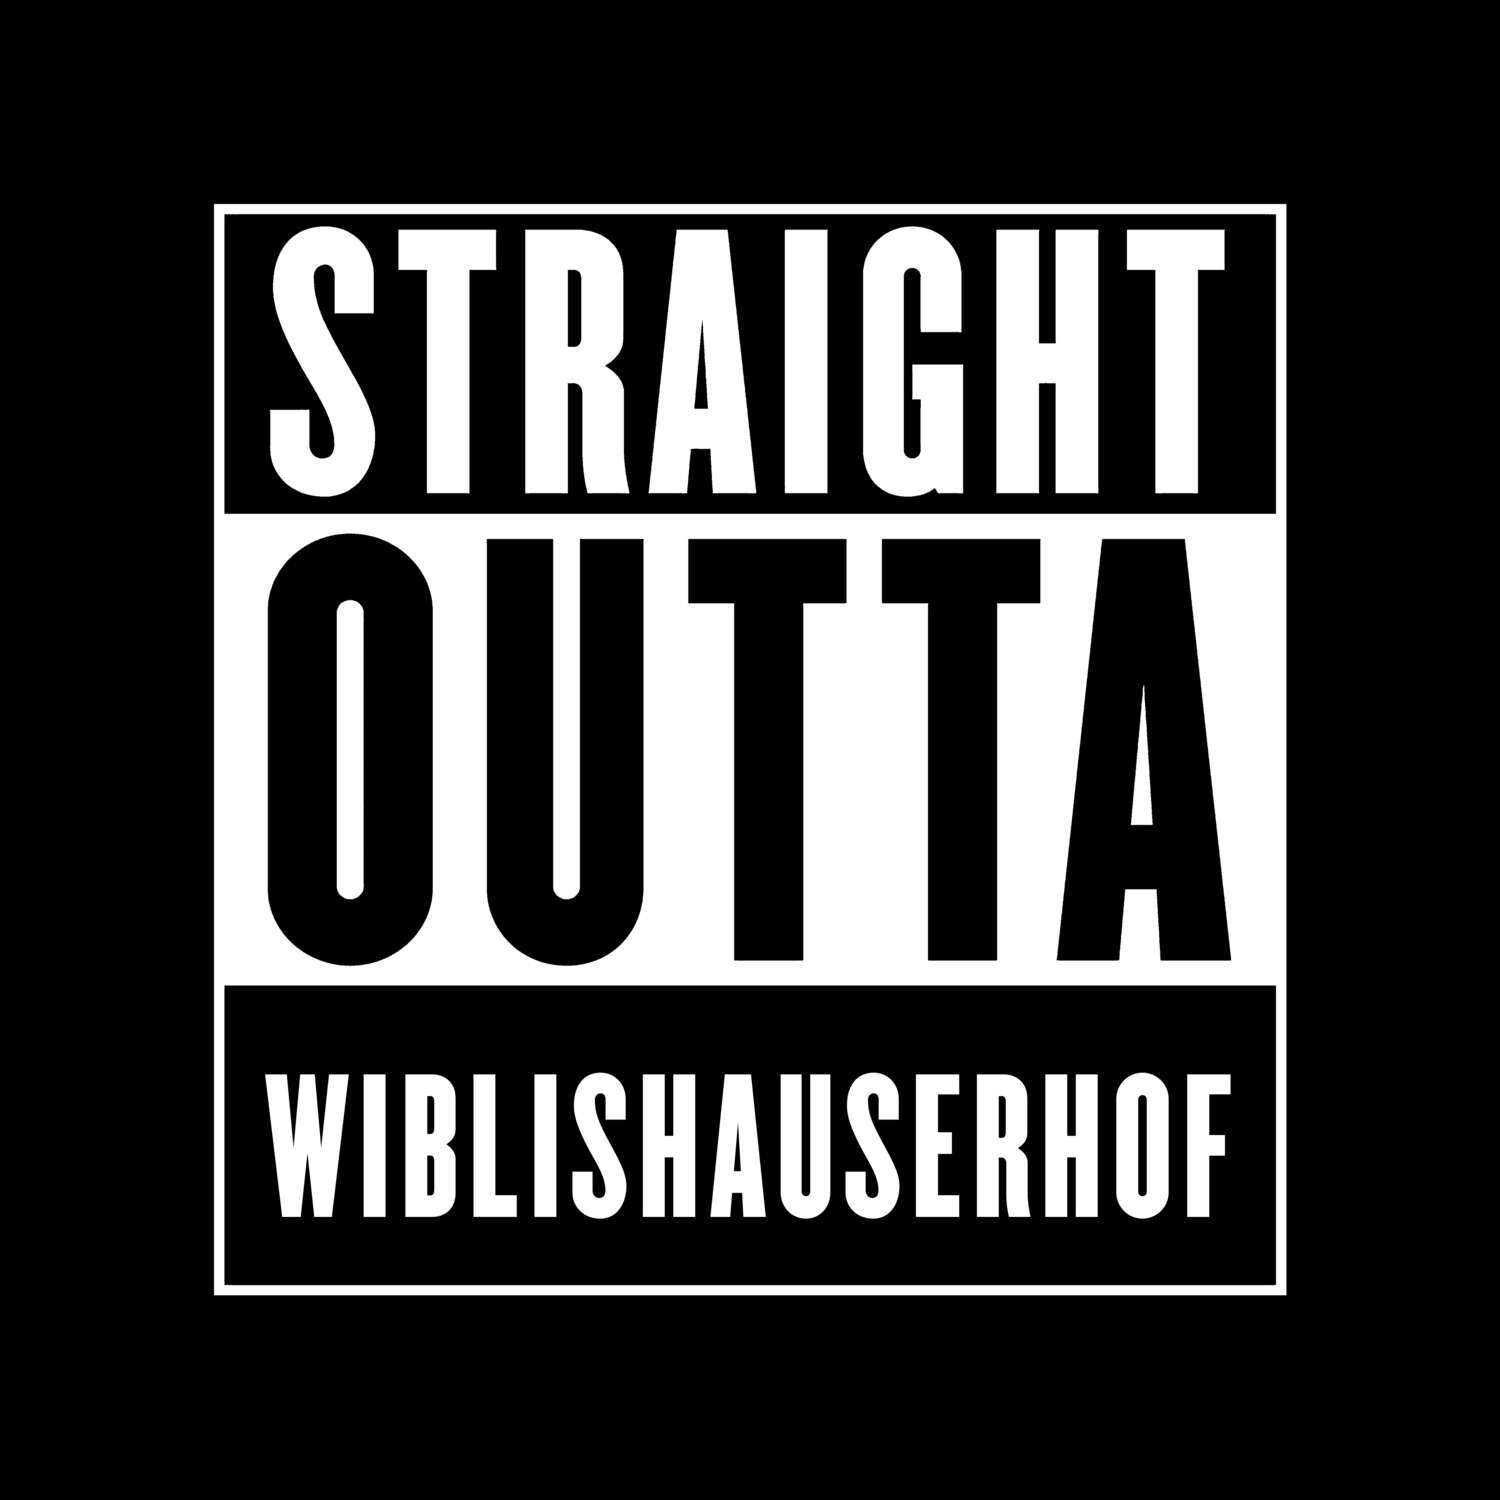 Wiblishauserhof T-Shirt »Straight Outta«